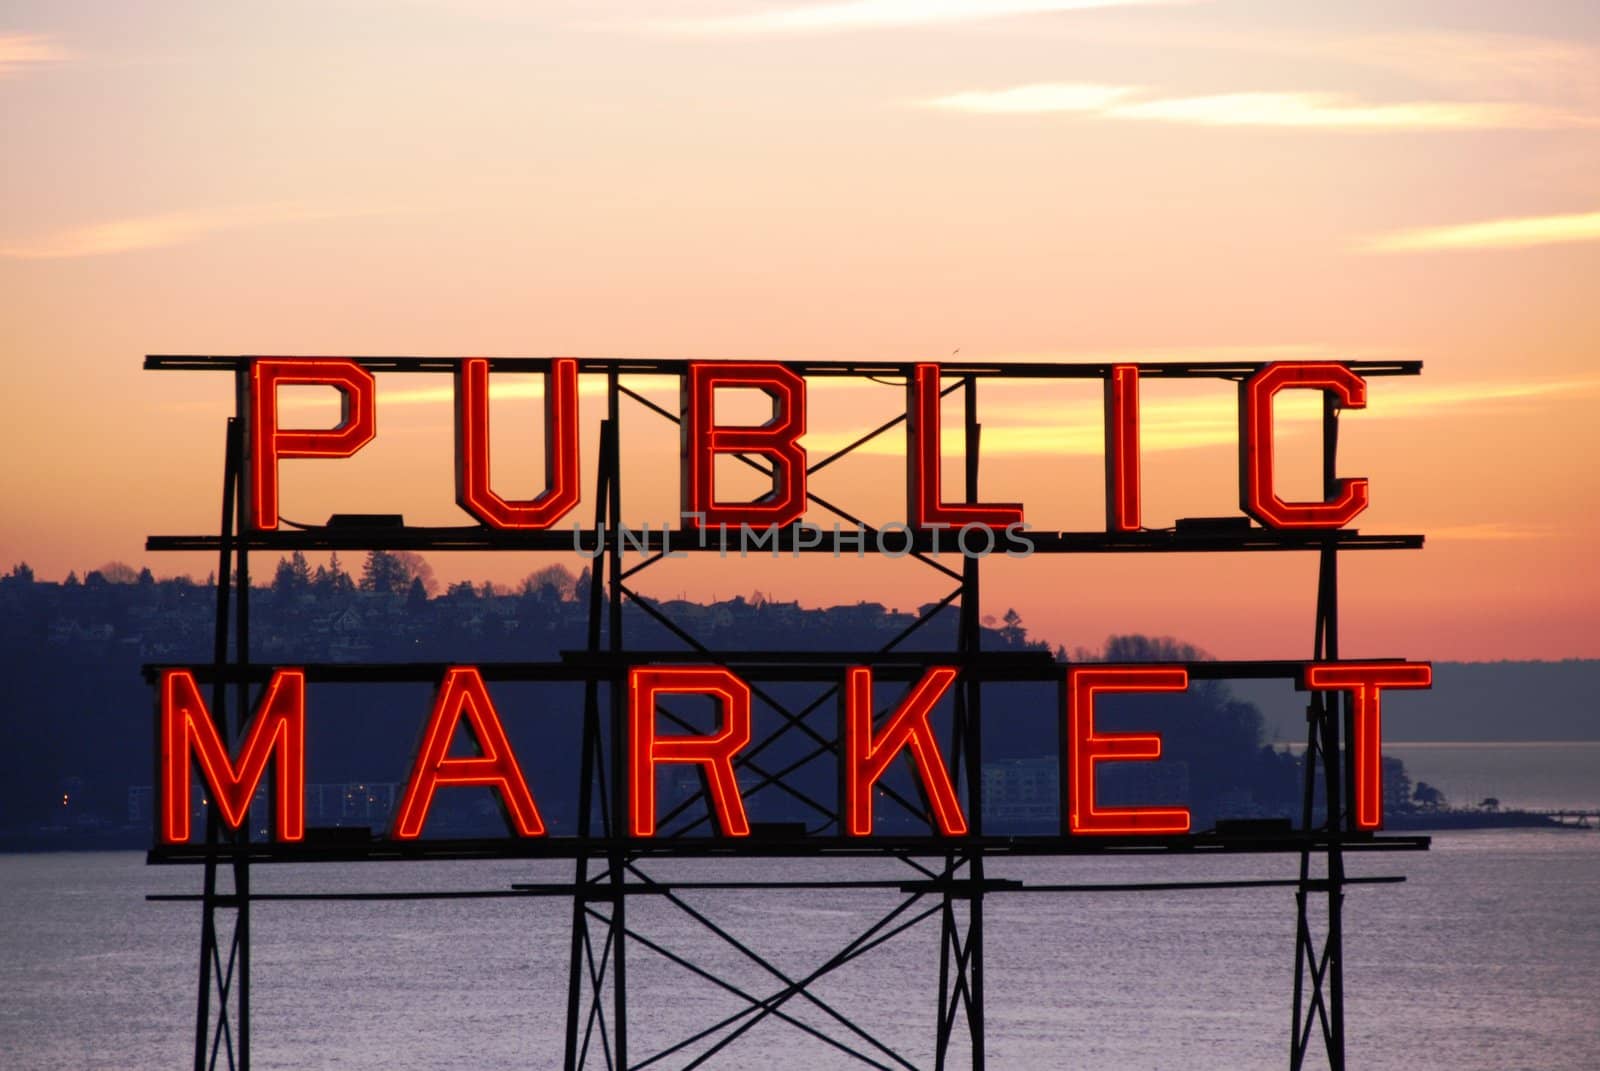 Pike place public marekt in Seattle WA on a Sunday monring.